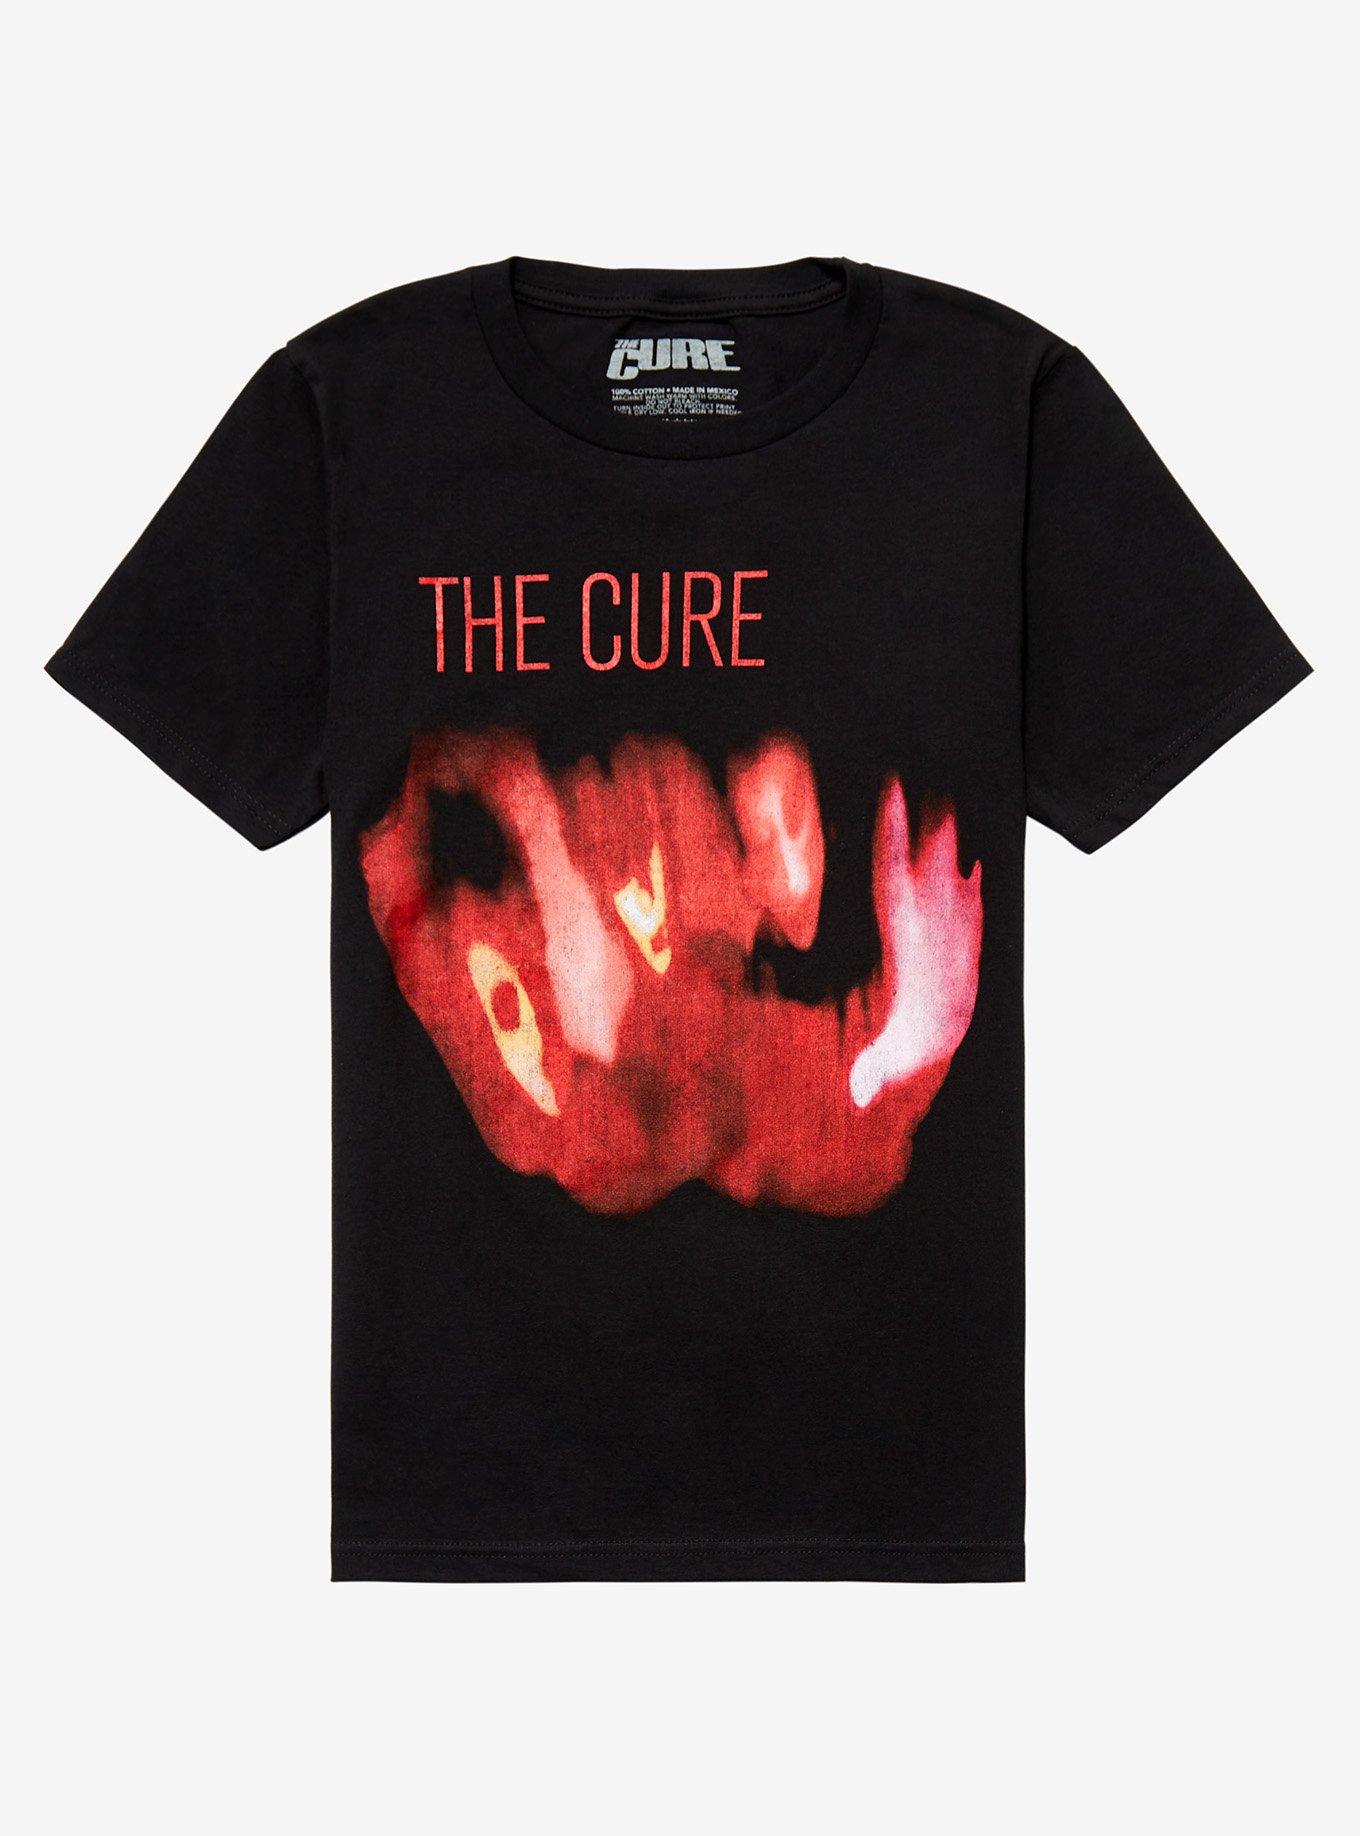 The Cure Blur Boyfriend Fit Girls T-Shirt, BLACK, hi-res